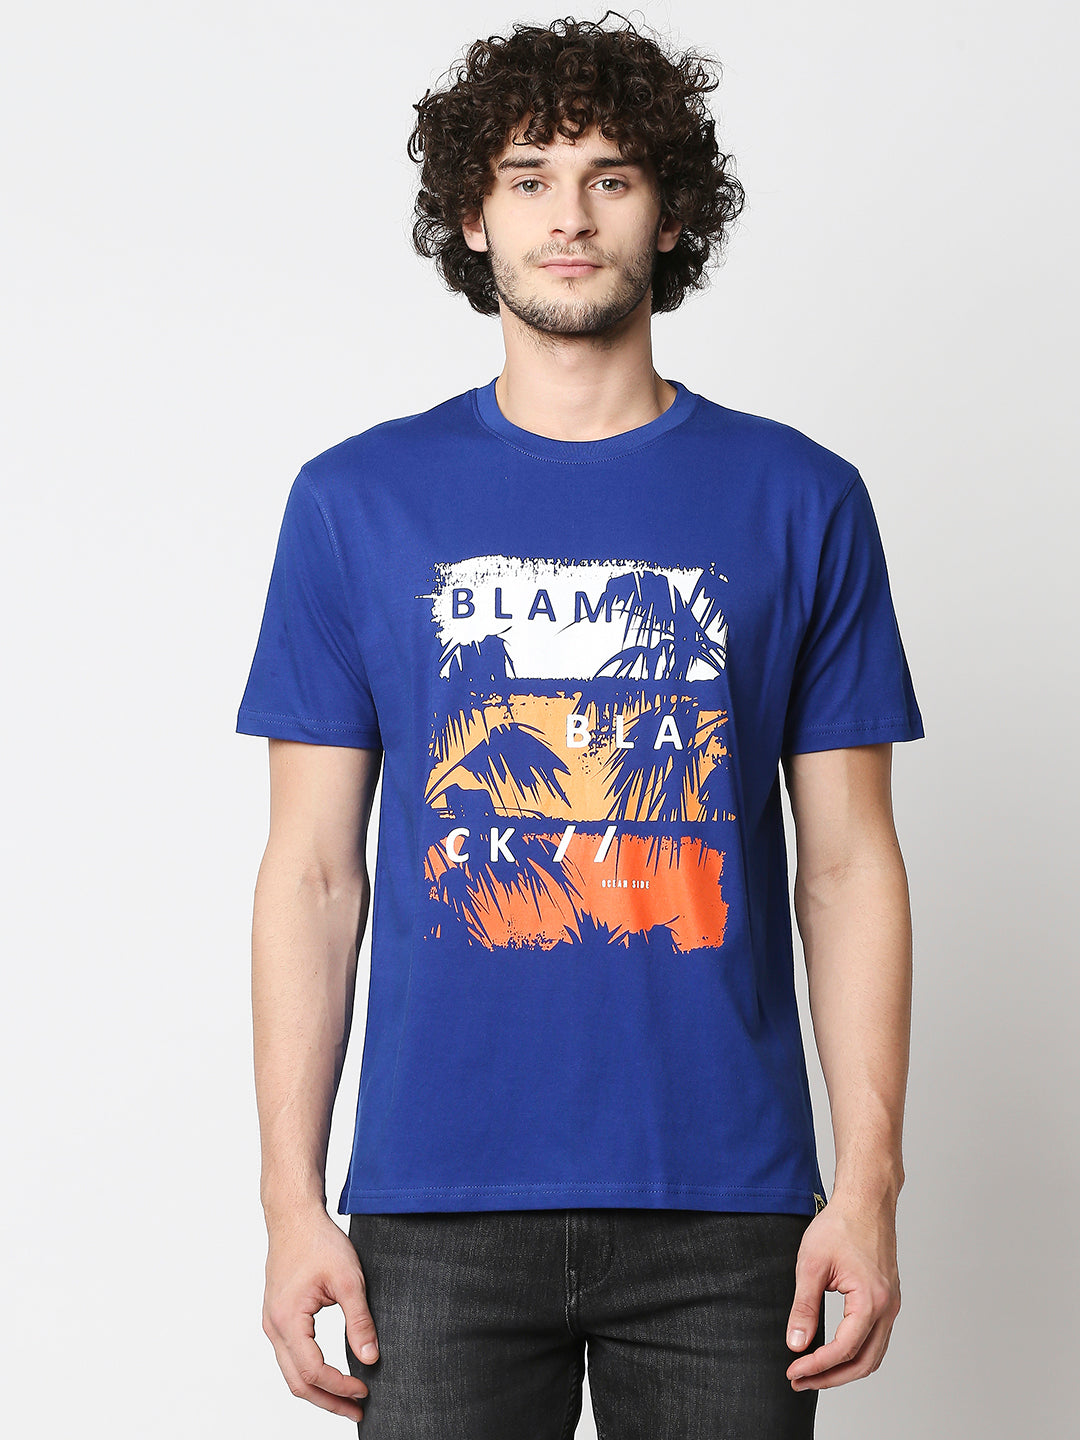 Buy BLAMBLACK Men Round neck T Shirt Royal Blue Color Printed Half sleeves